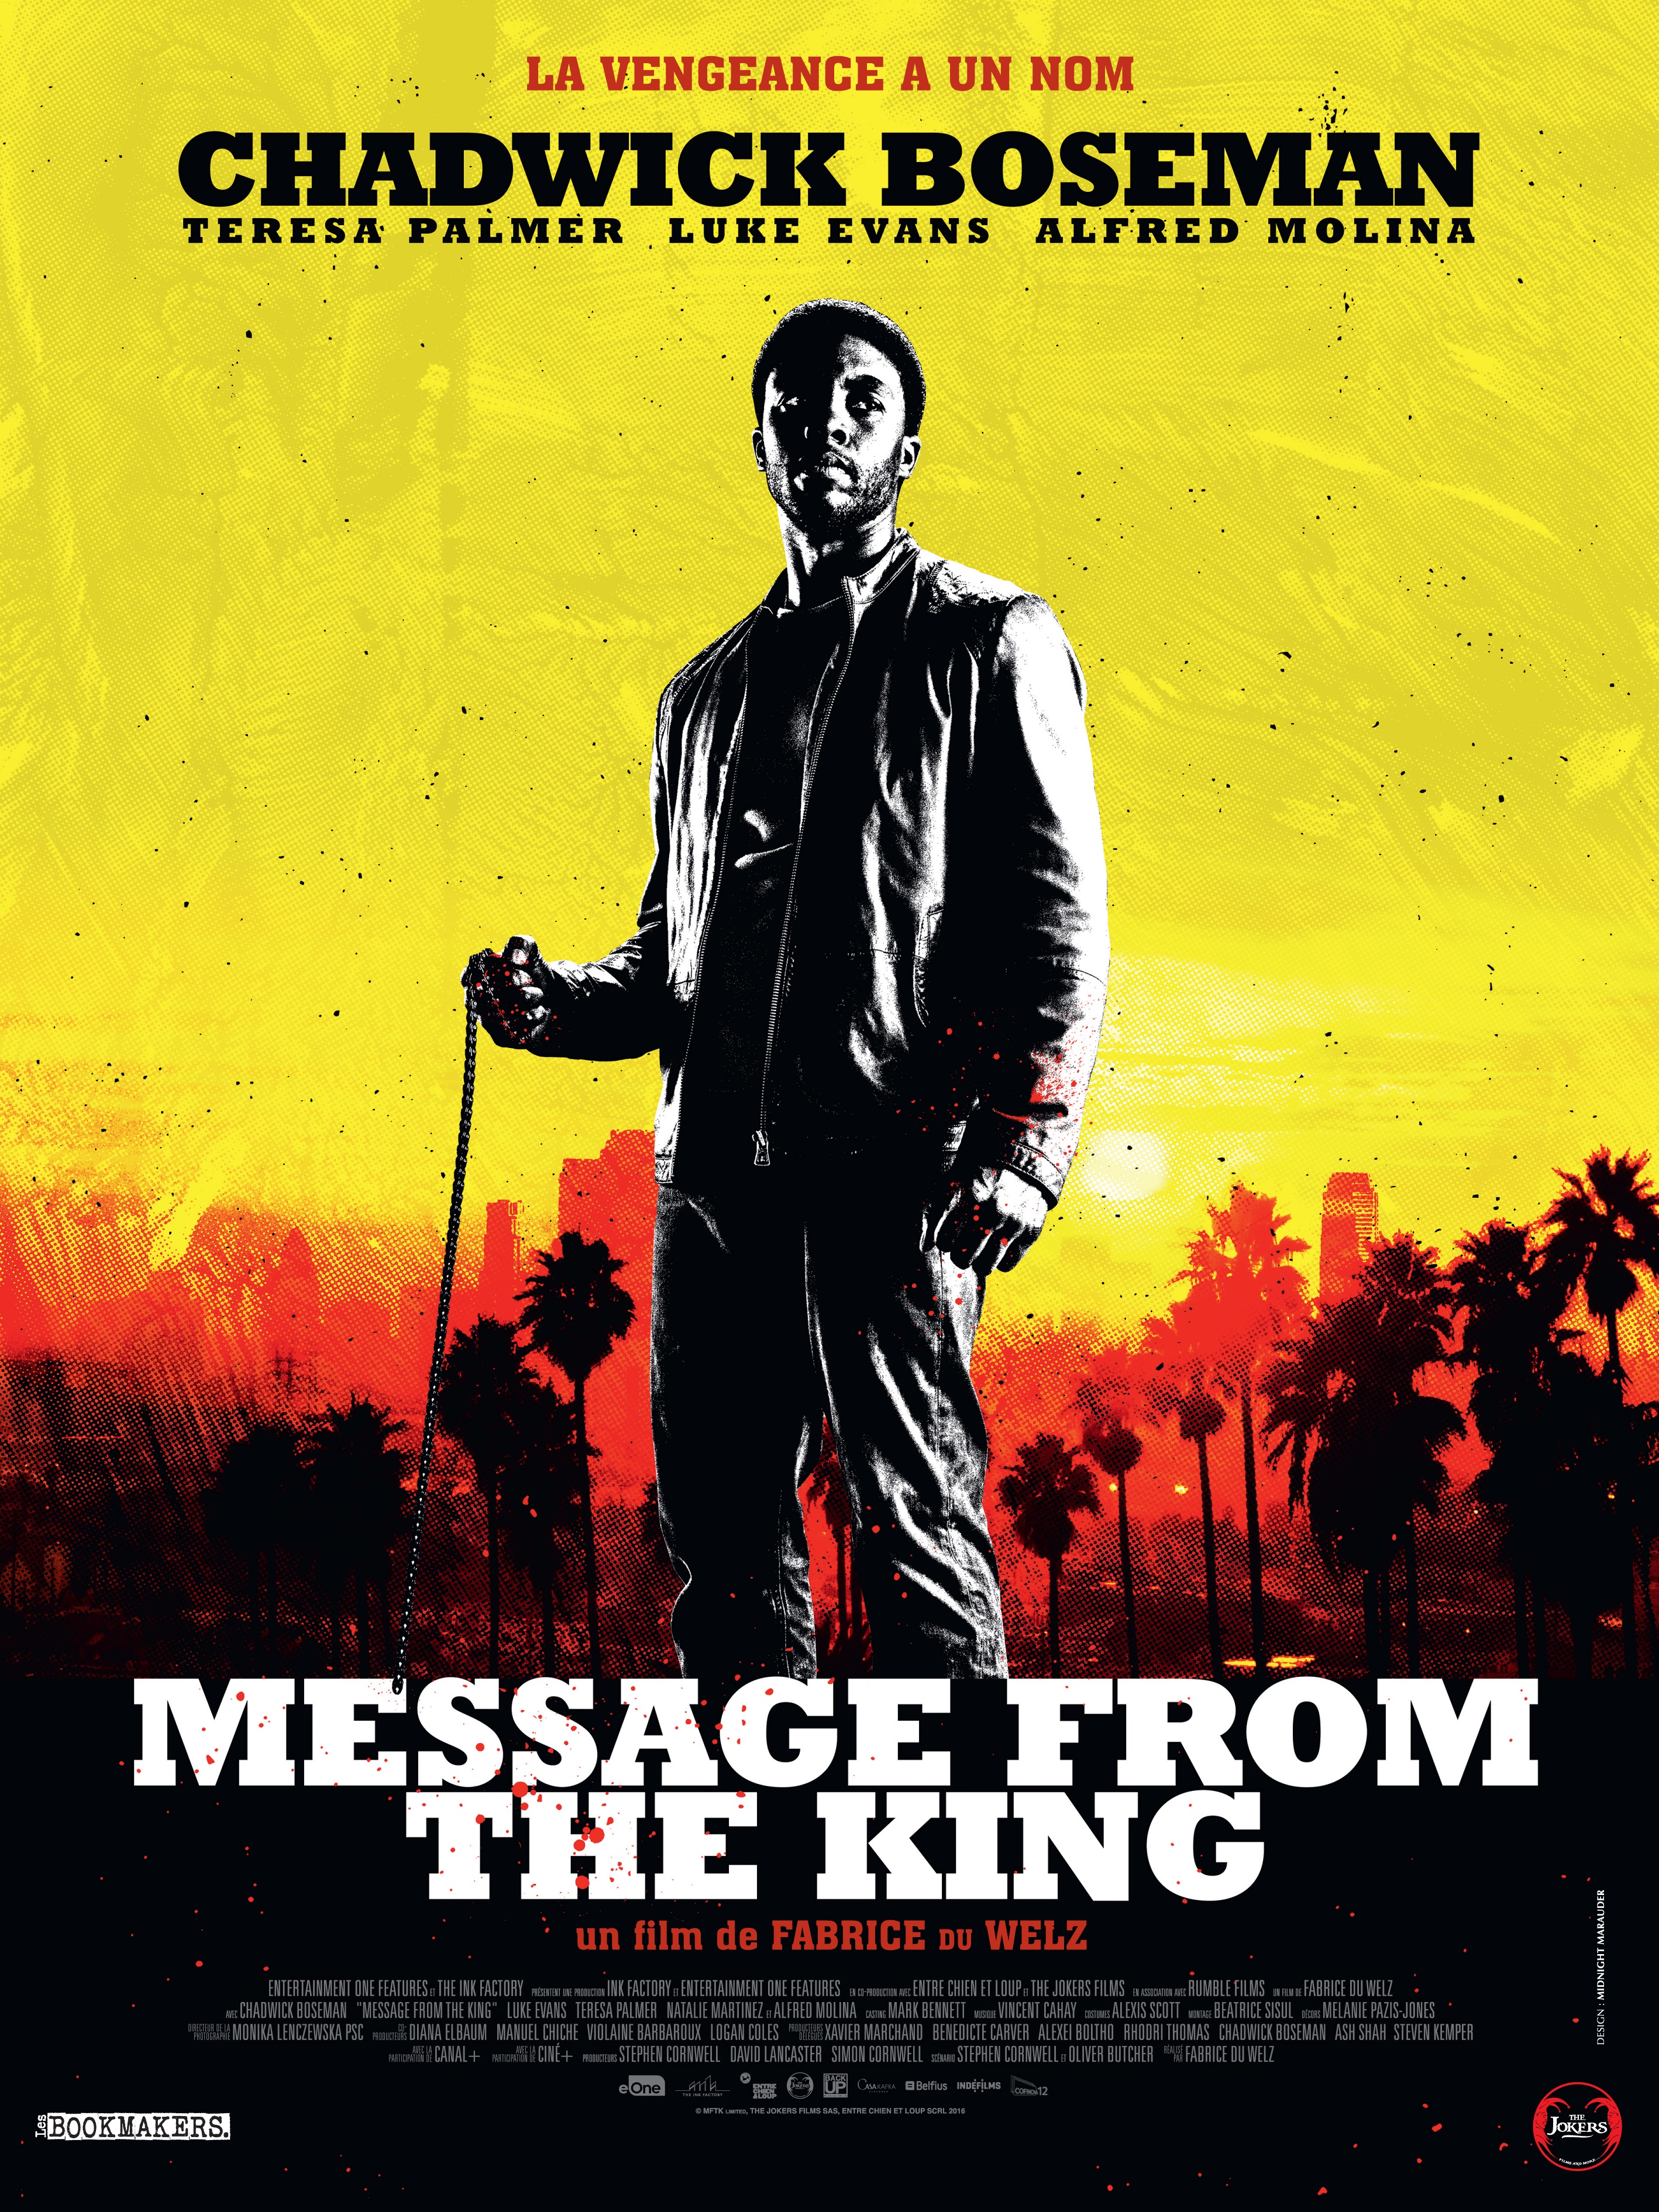 Nonton film Message from the King layarkaca21 indoxx1 ganool online streaming terbaru